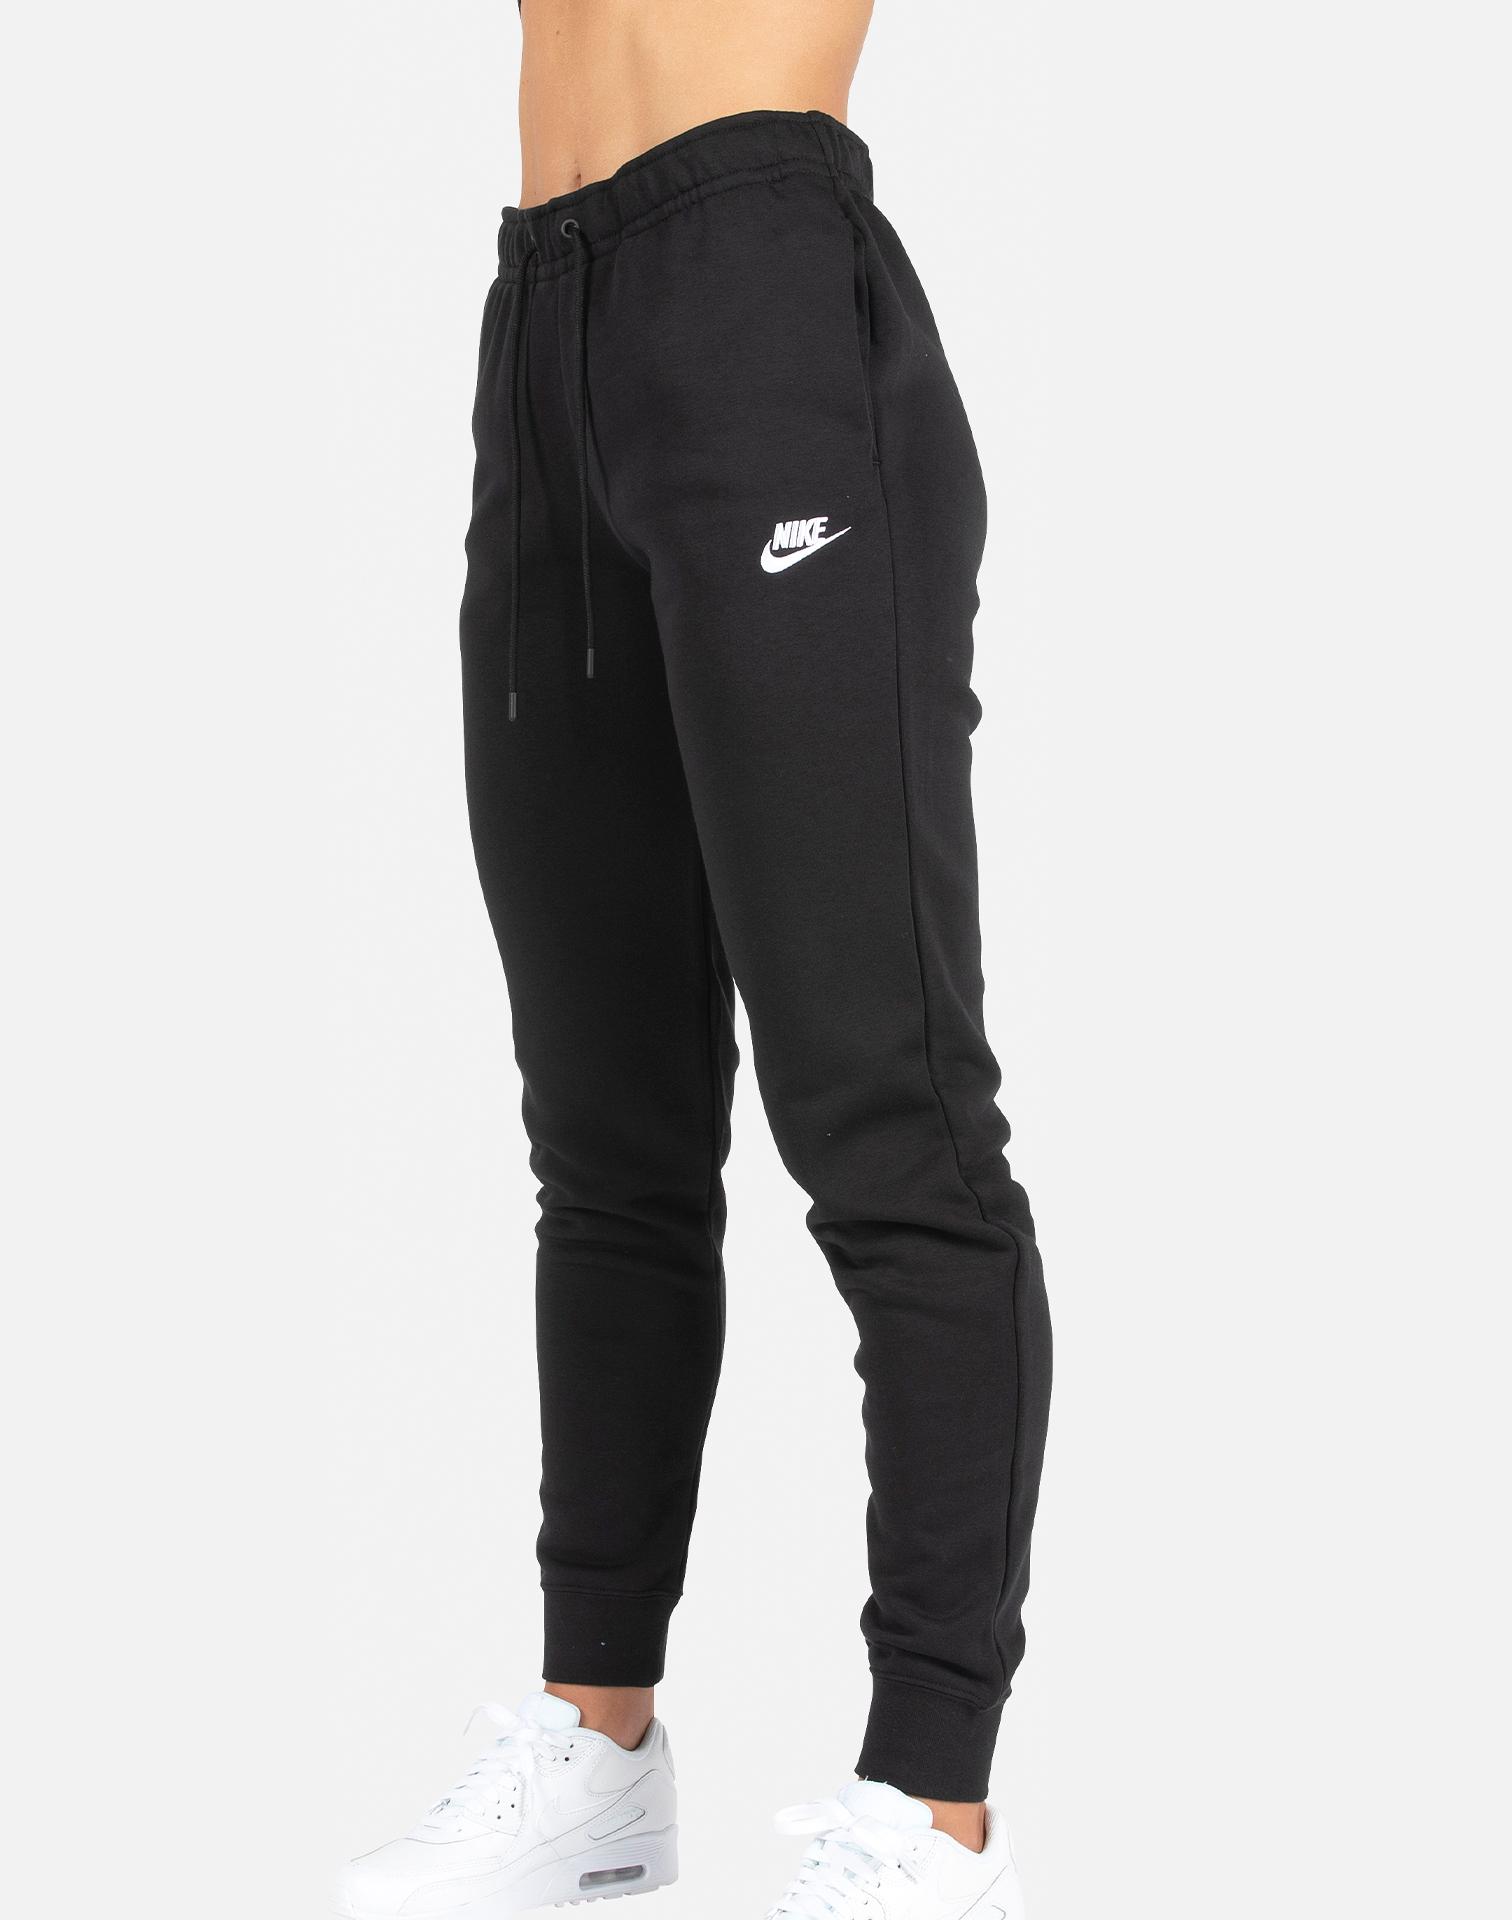 Nike Nsw Essential Fleece Pants in Black - Lyst